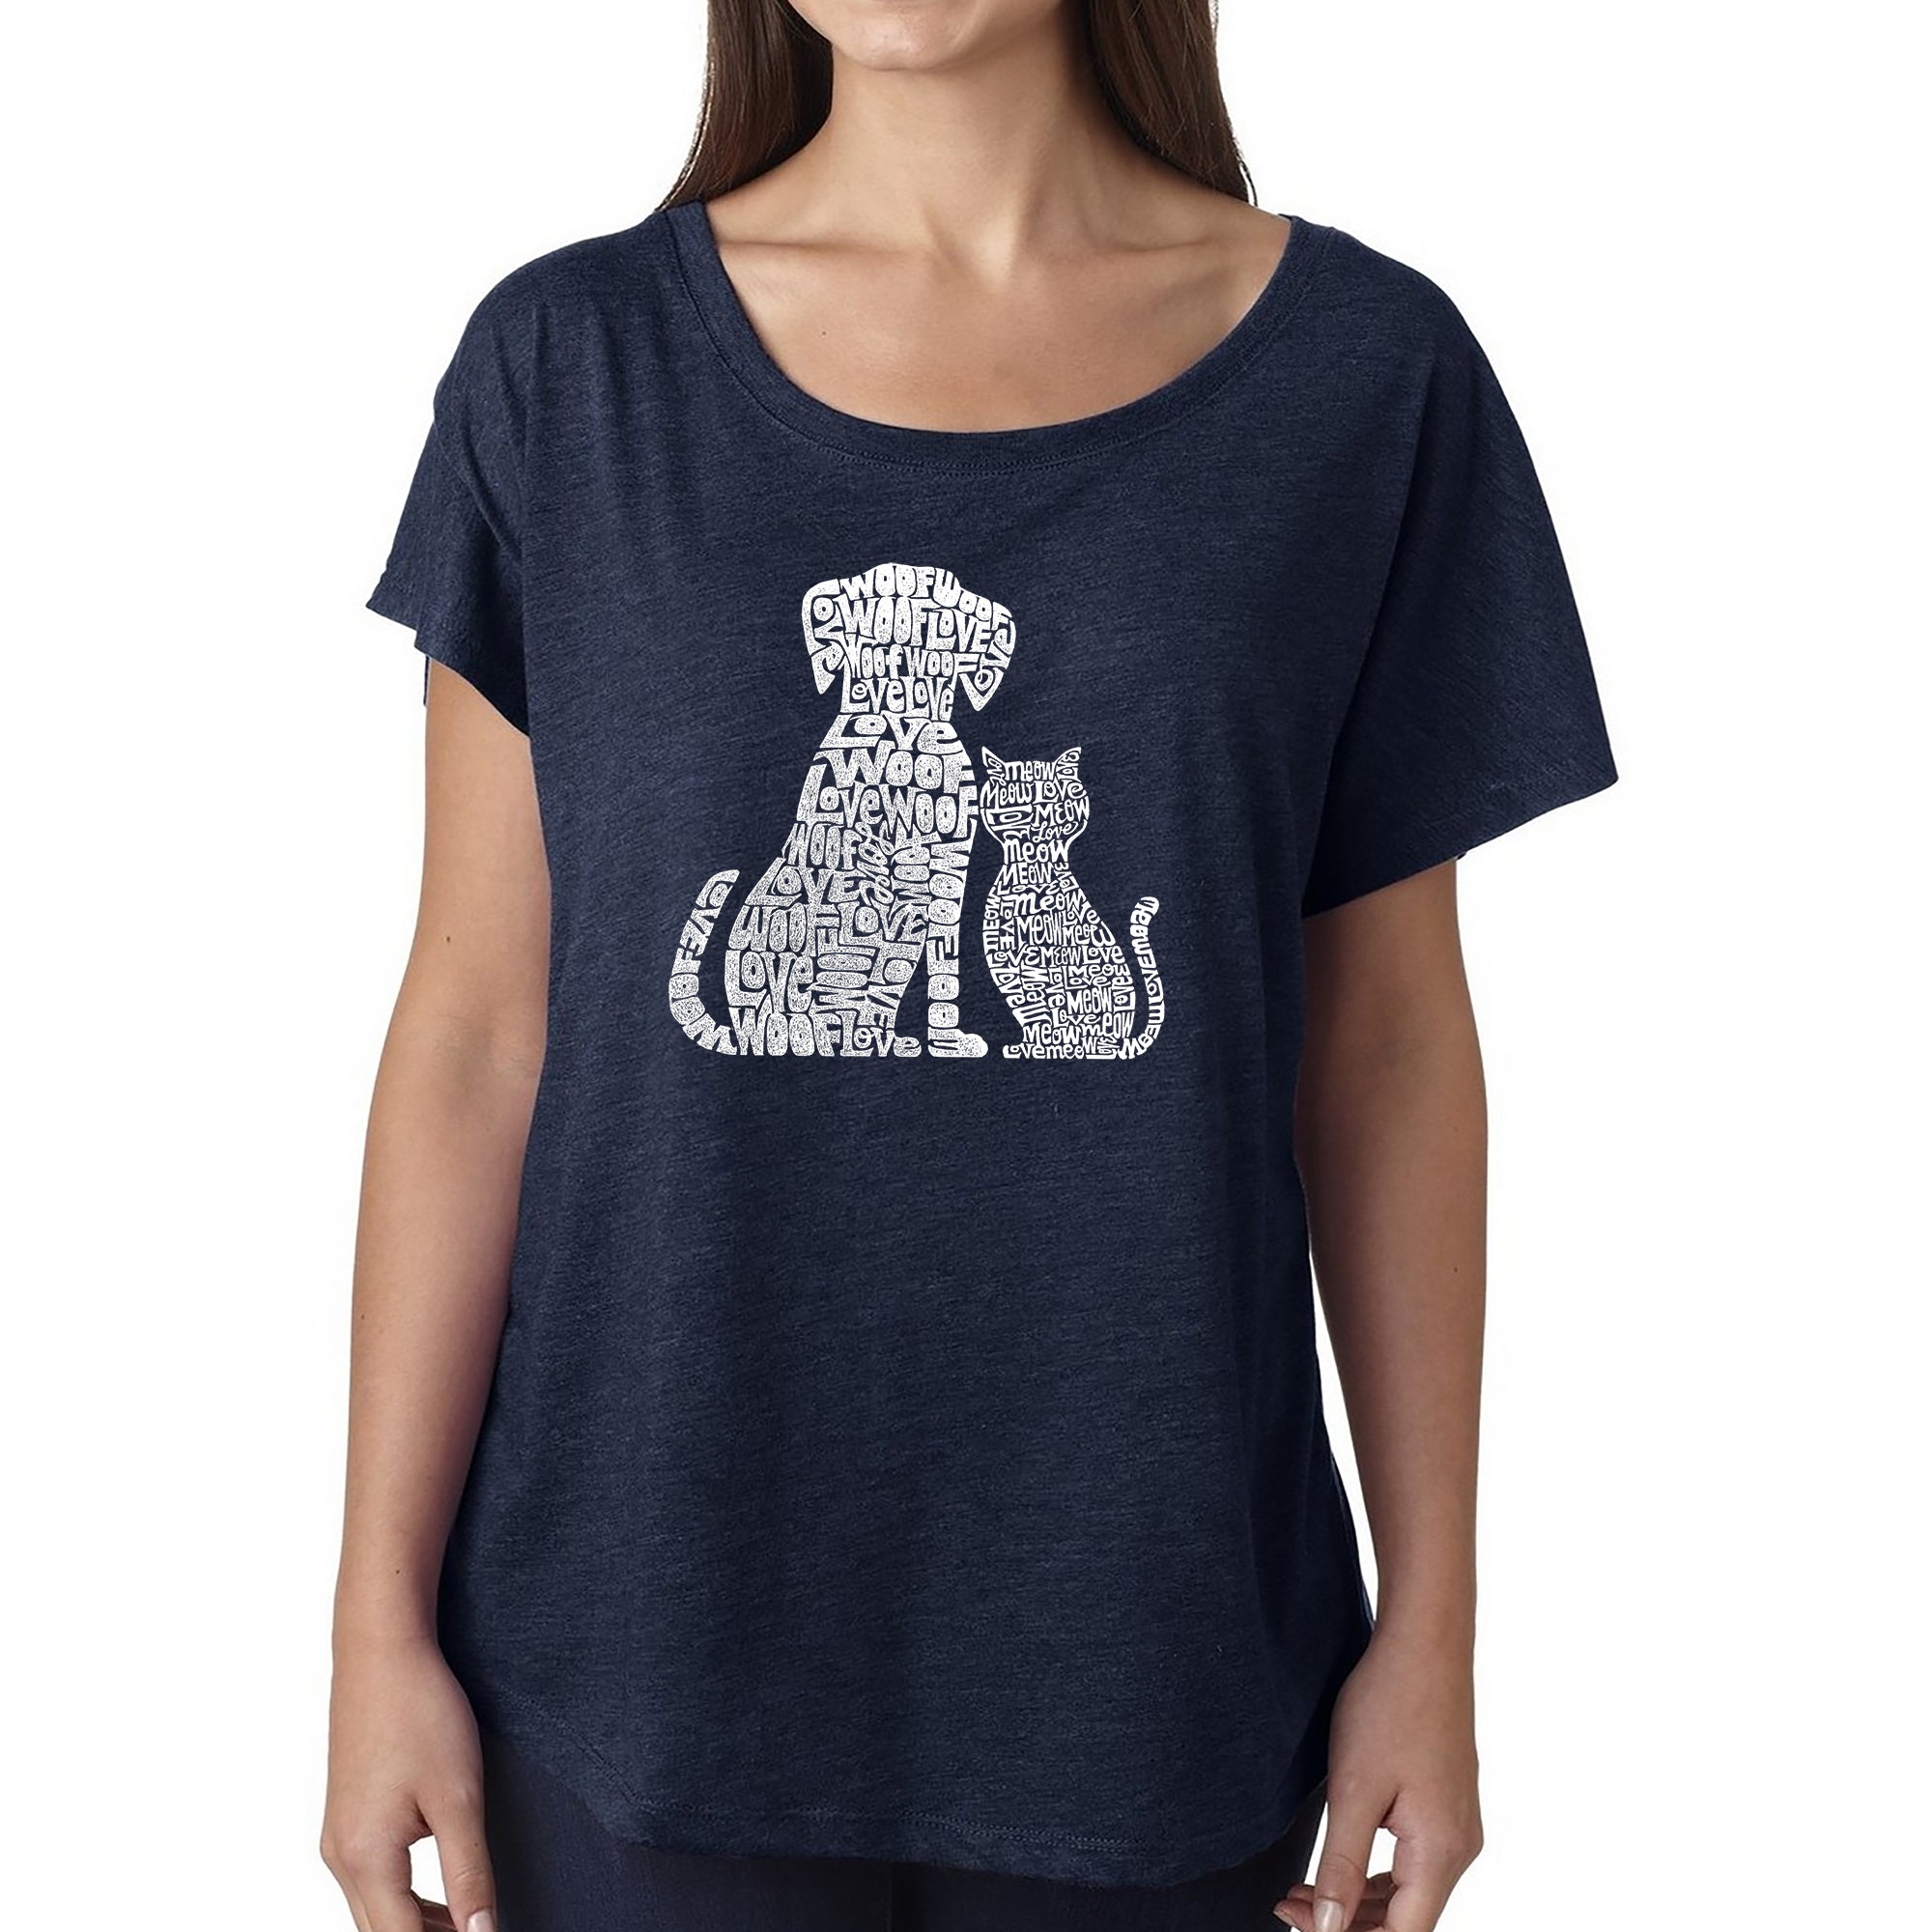 Dogs And Cats - Women's Loose Fit Dolman Cut Word Art Shirt - Navy - Medium